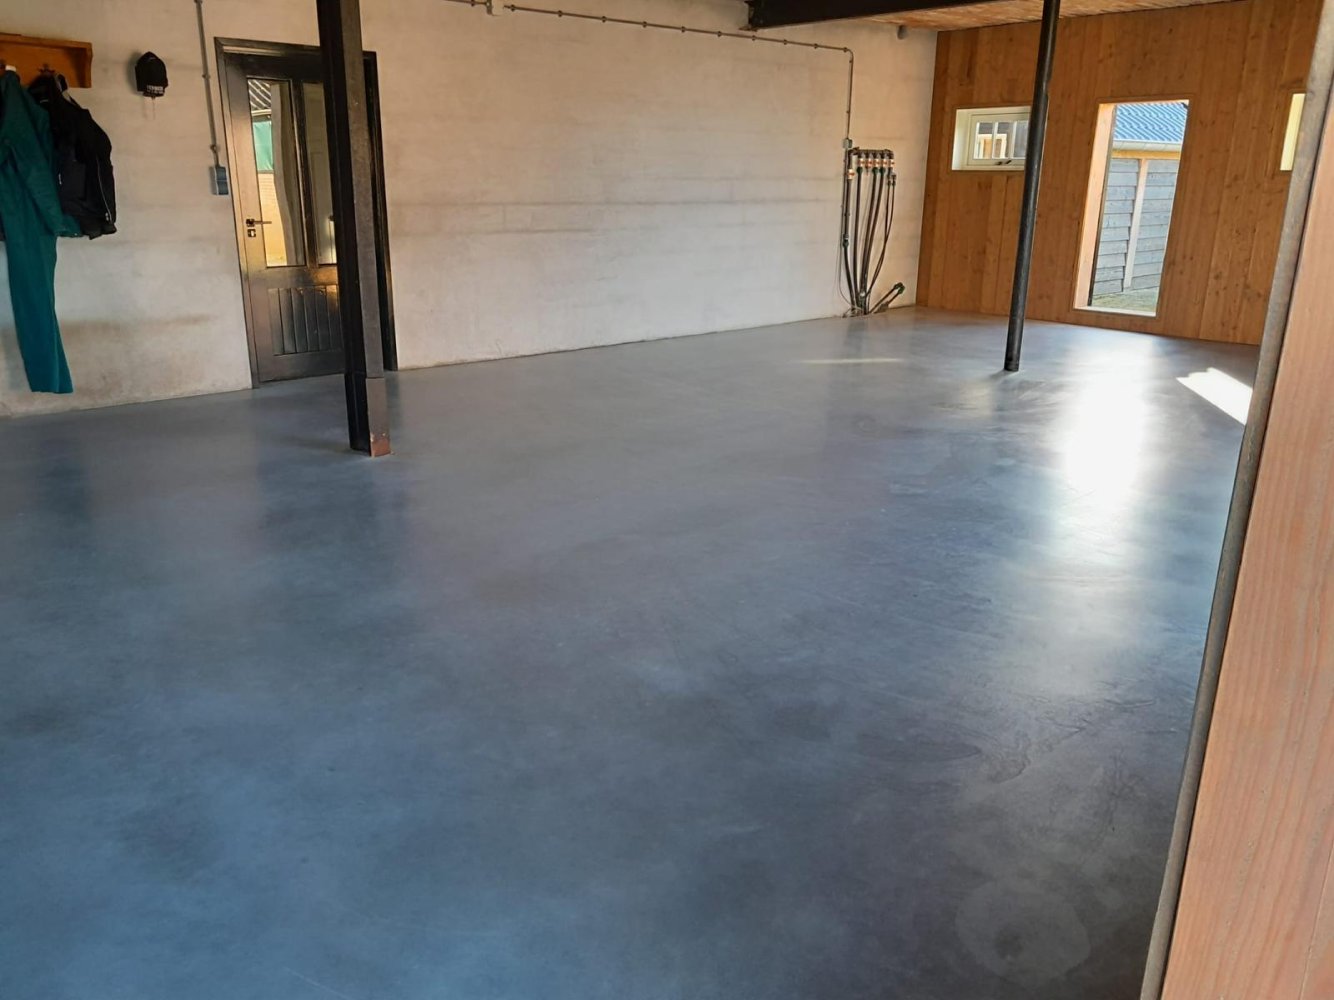 Hardeman vloerreiniging - beton vloeren reinigen - barneveld 3